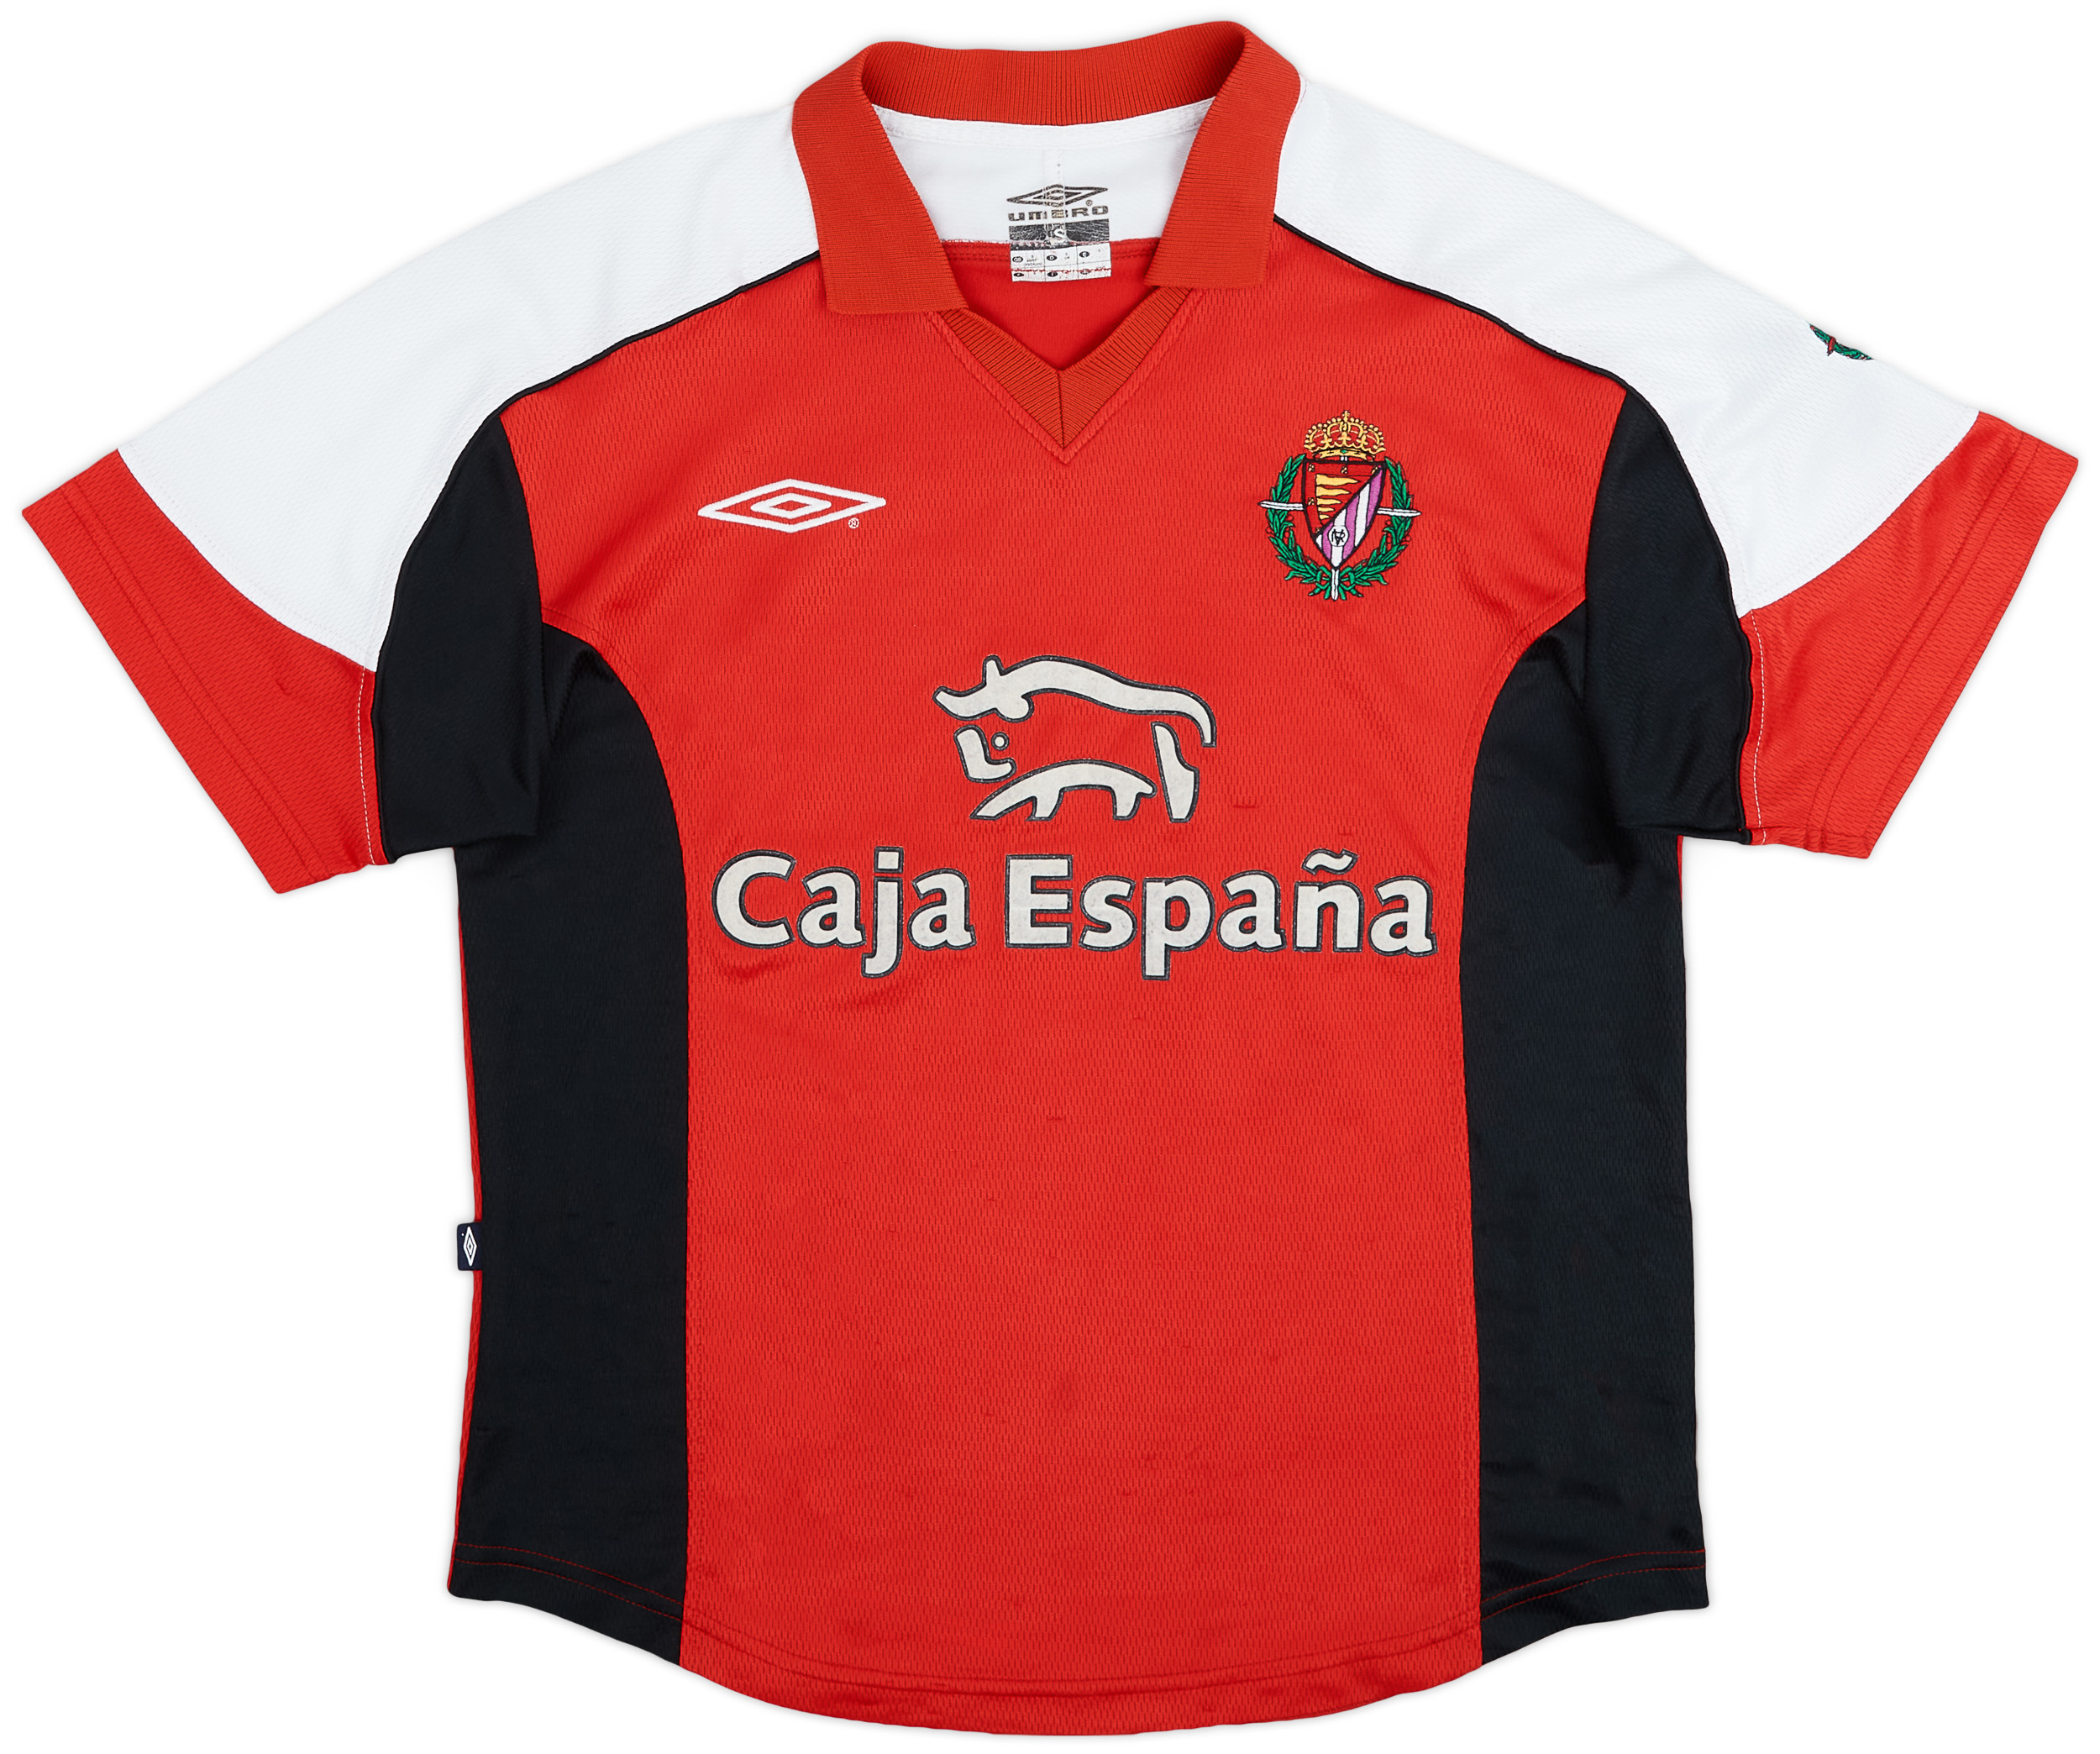 2001-03 Real Valladolid Away Shirt - 8/10 - ()